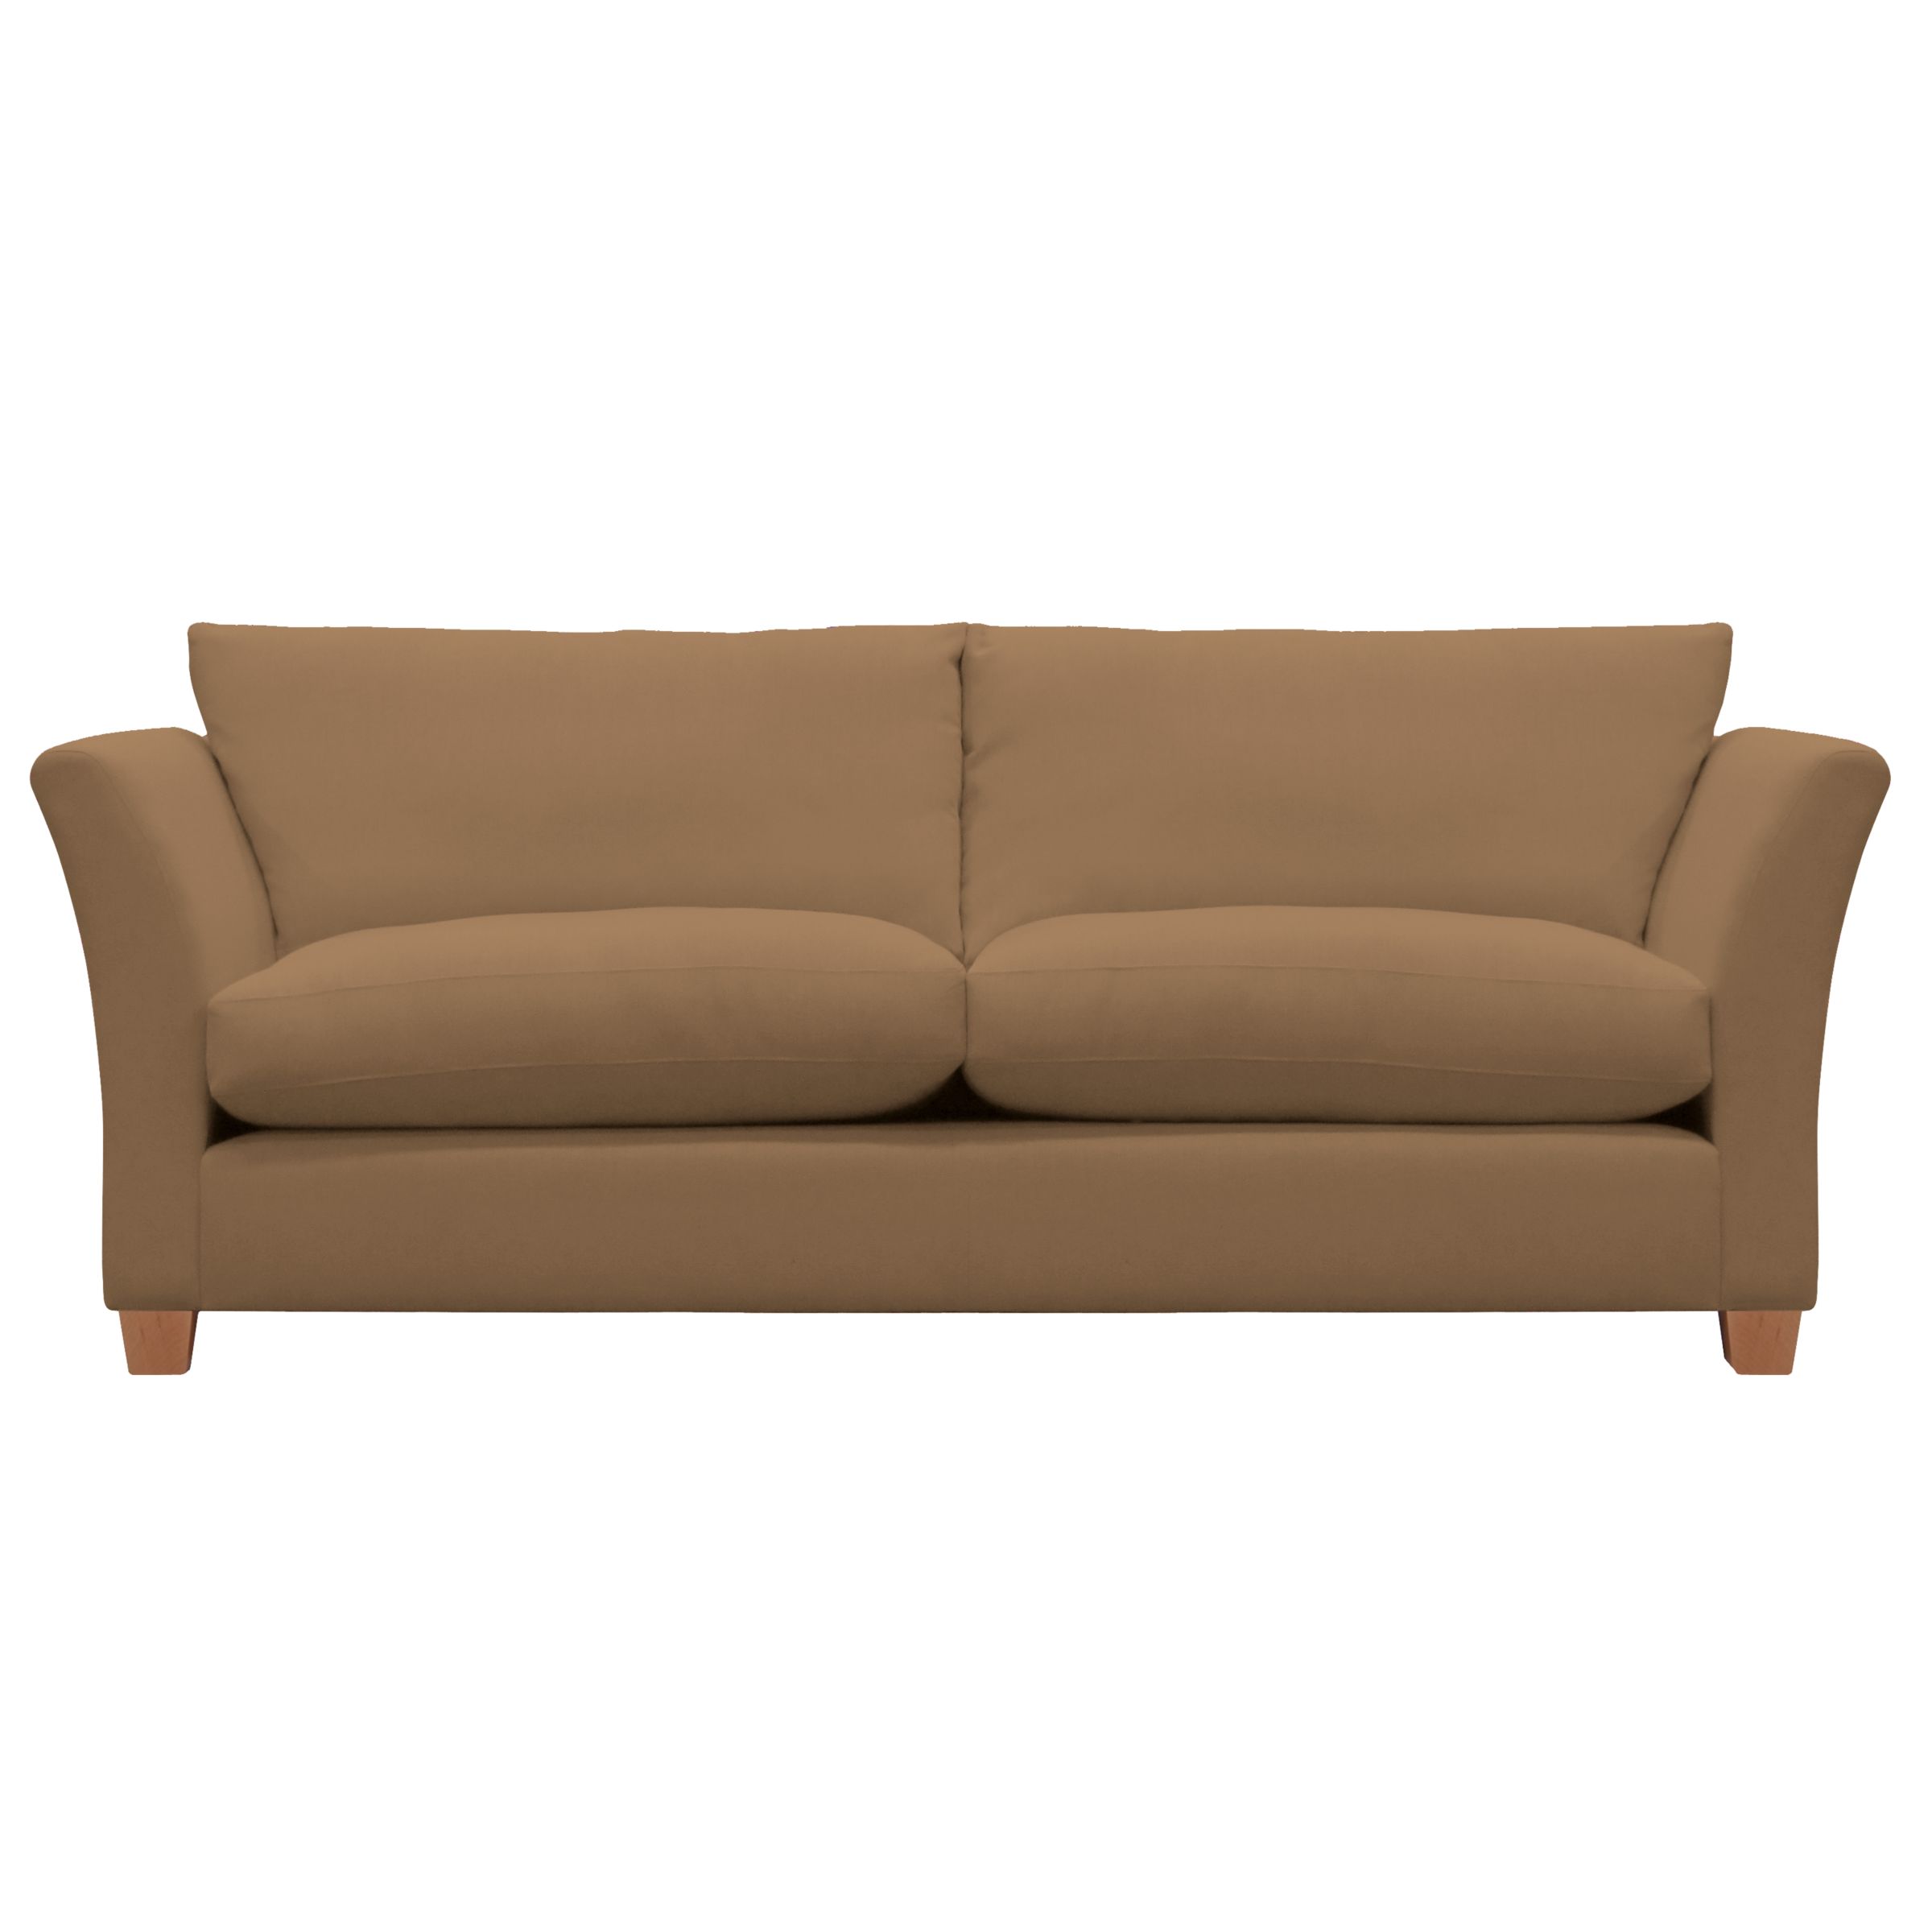 John Lewis Options Flare Arm Grand Sofa, Linley Mushroom, width 225cm